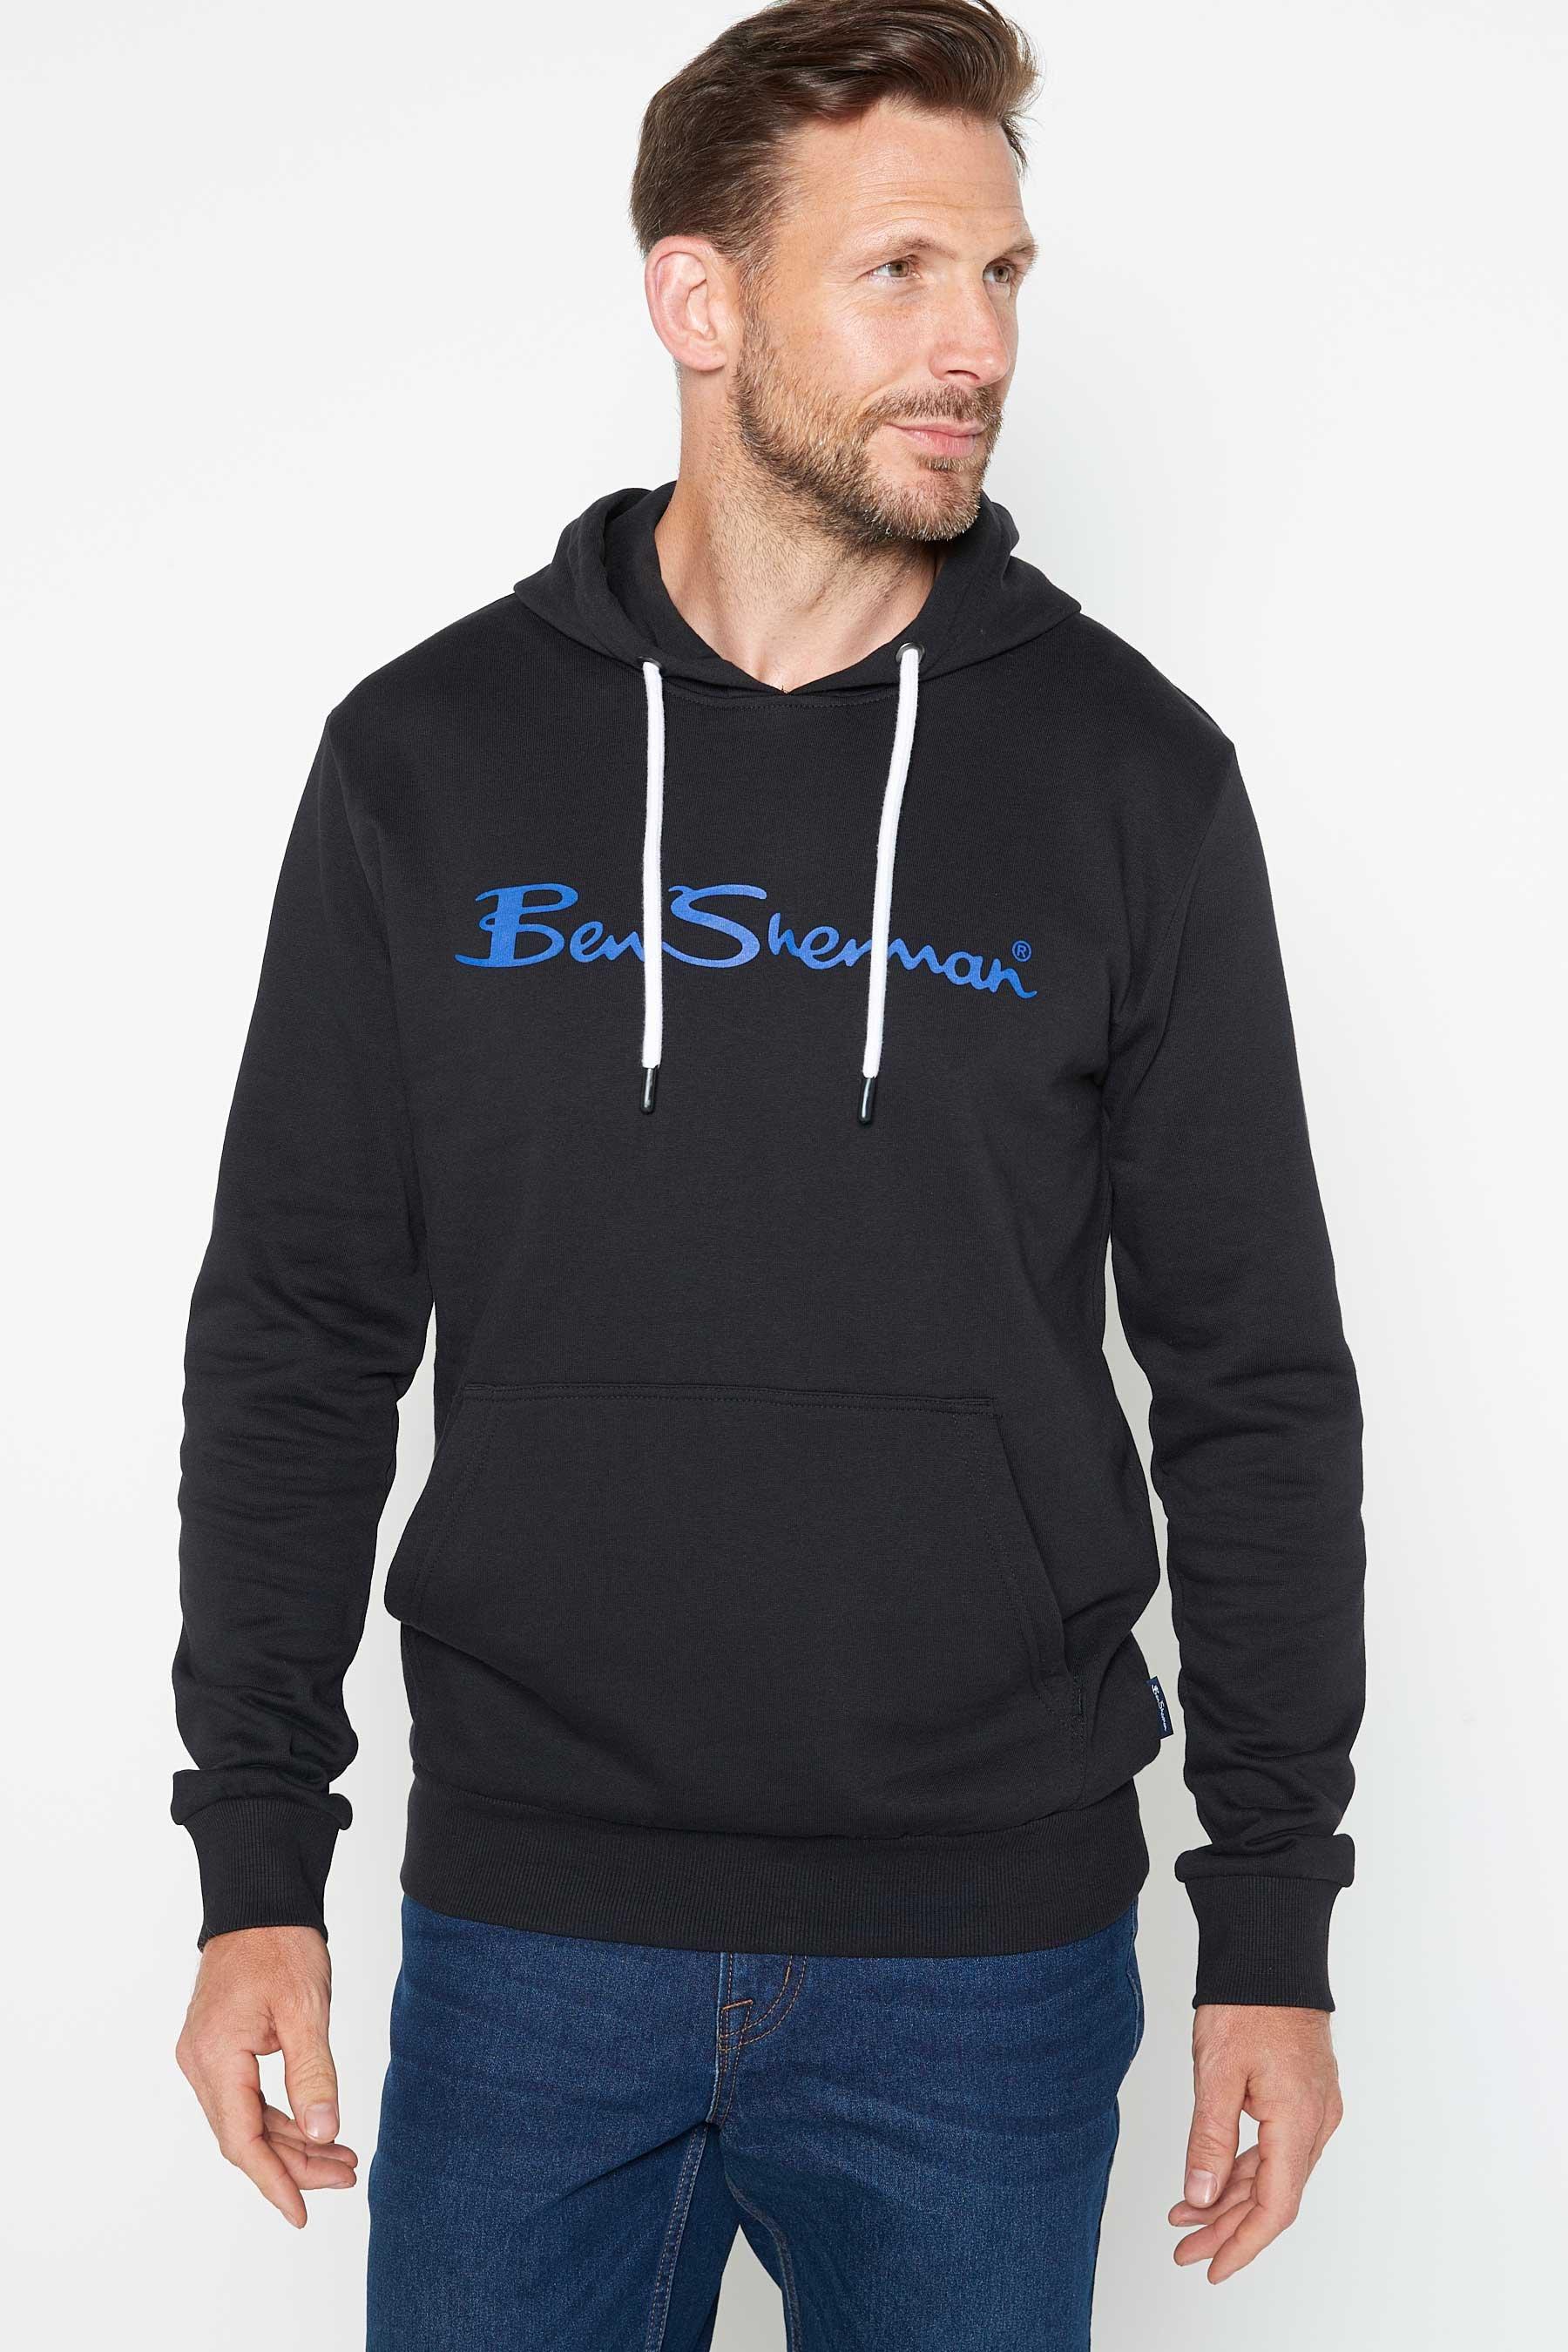 ben sherman black overhead hoodie - mens - size: small